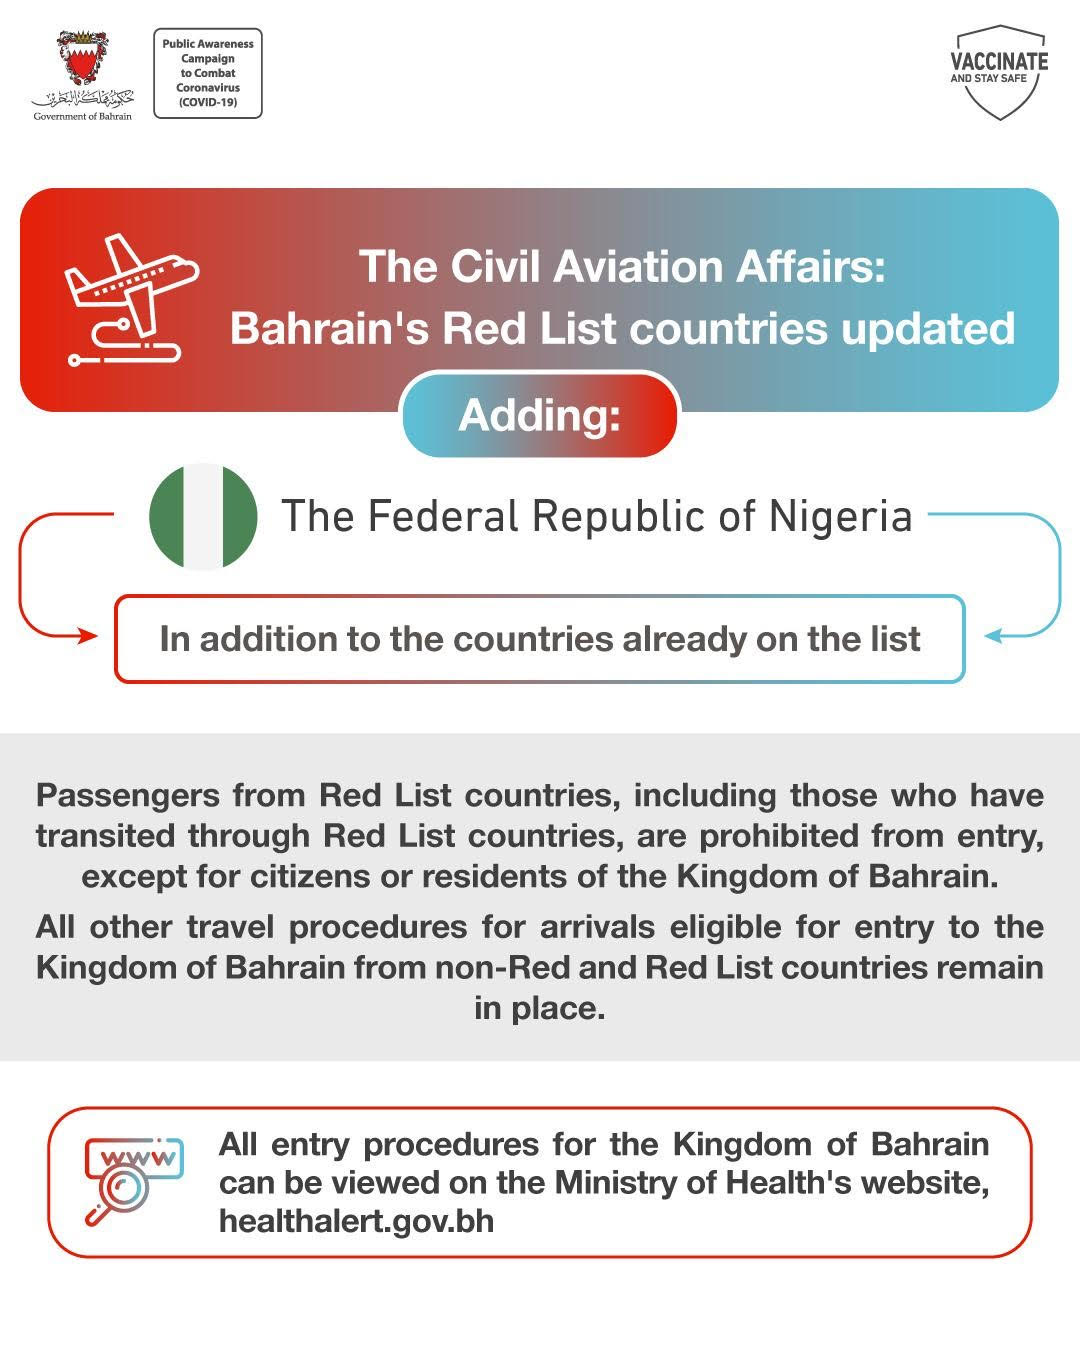 Civil Aviation Affairs: Bahrain’s Red List countries updated